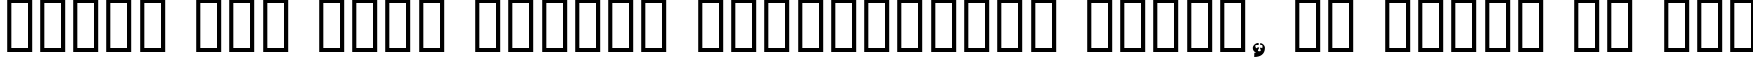 Пример написания шрифтом Jigsaw Trouserdrop текста на русском